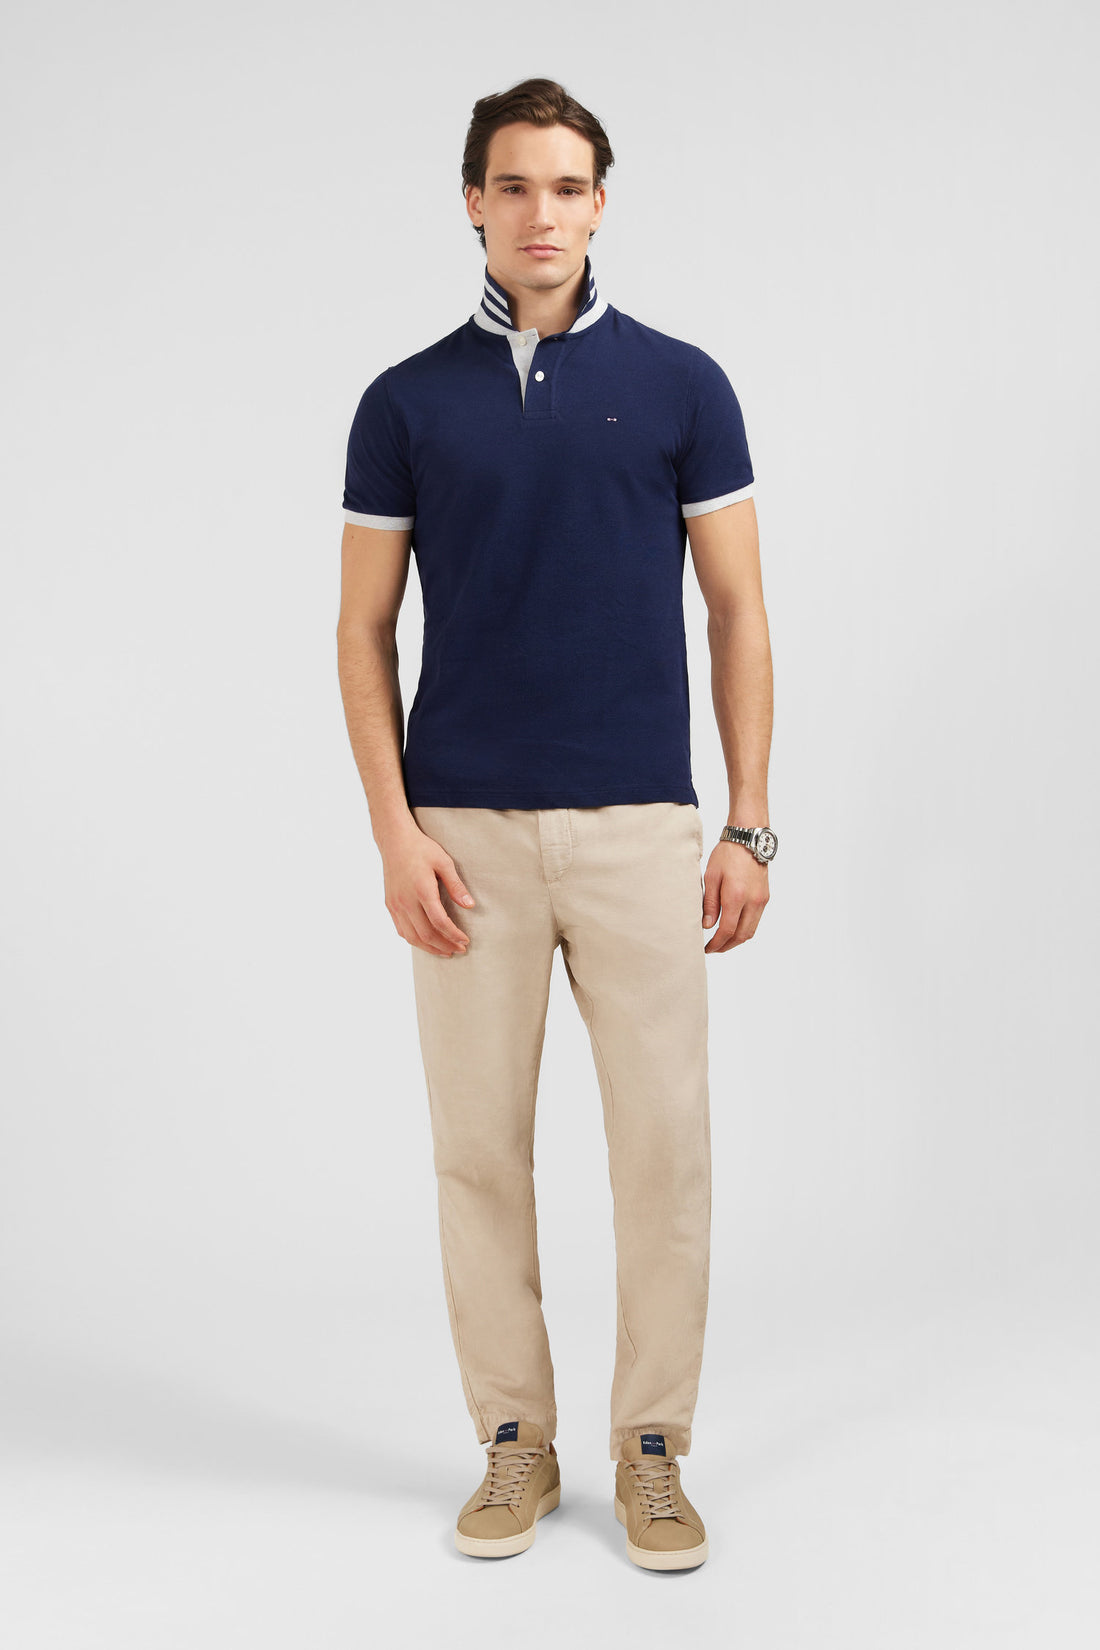 Navy Blue Short-Sleeved Polo Shirt_E24MAIPC0005_BLF27_01